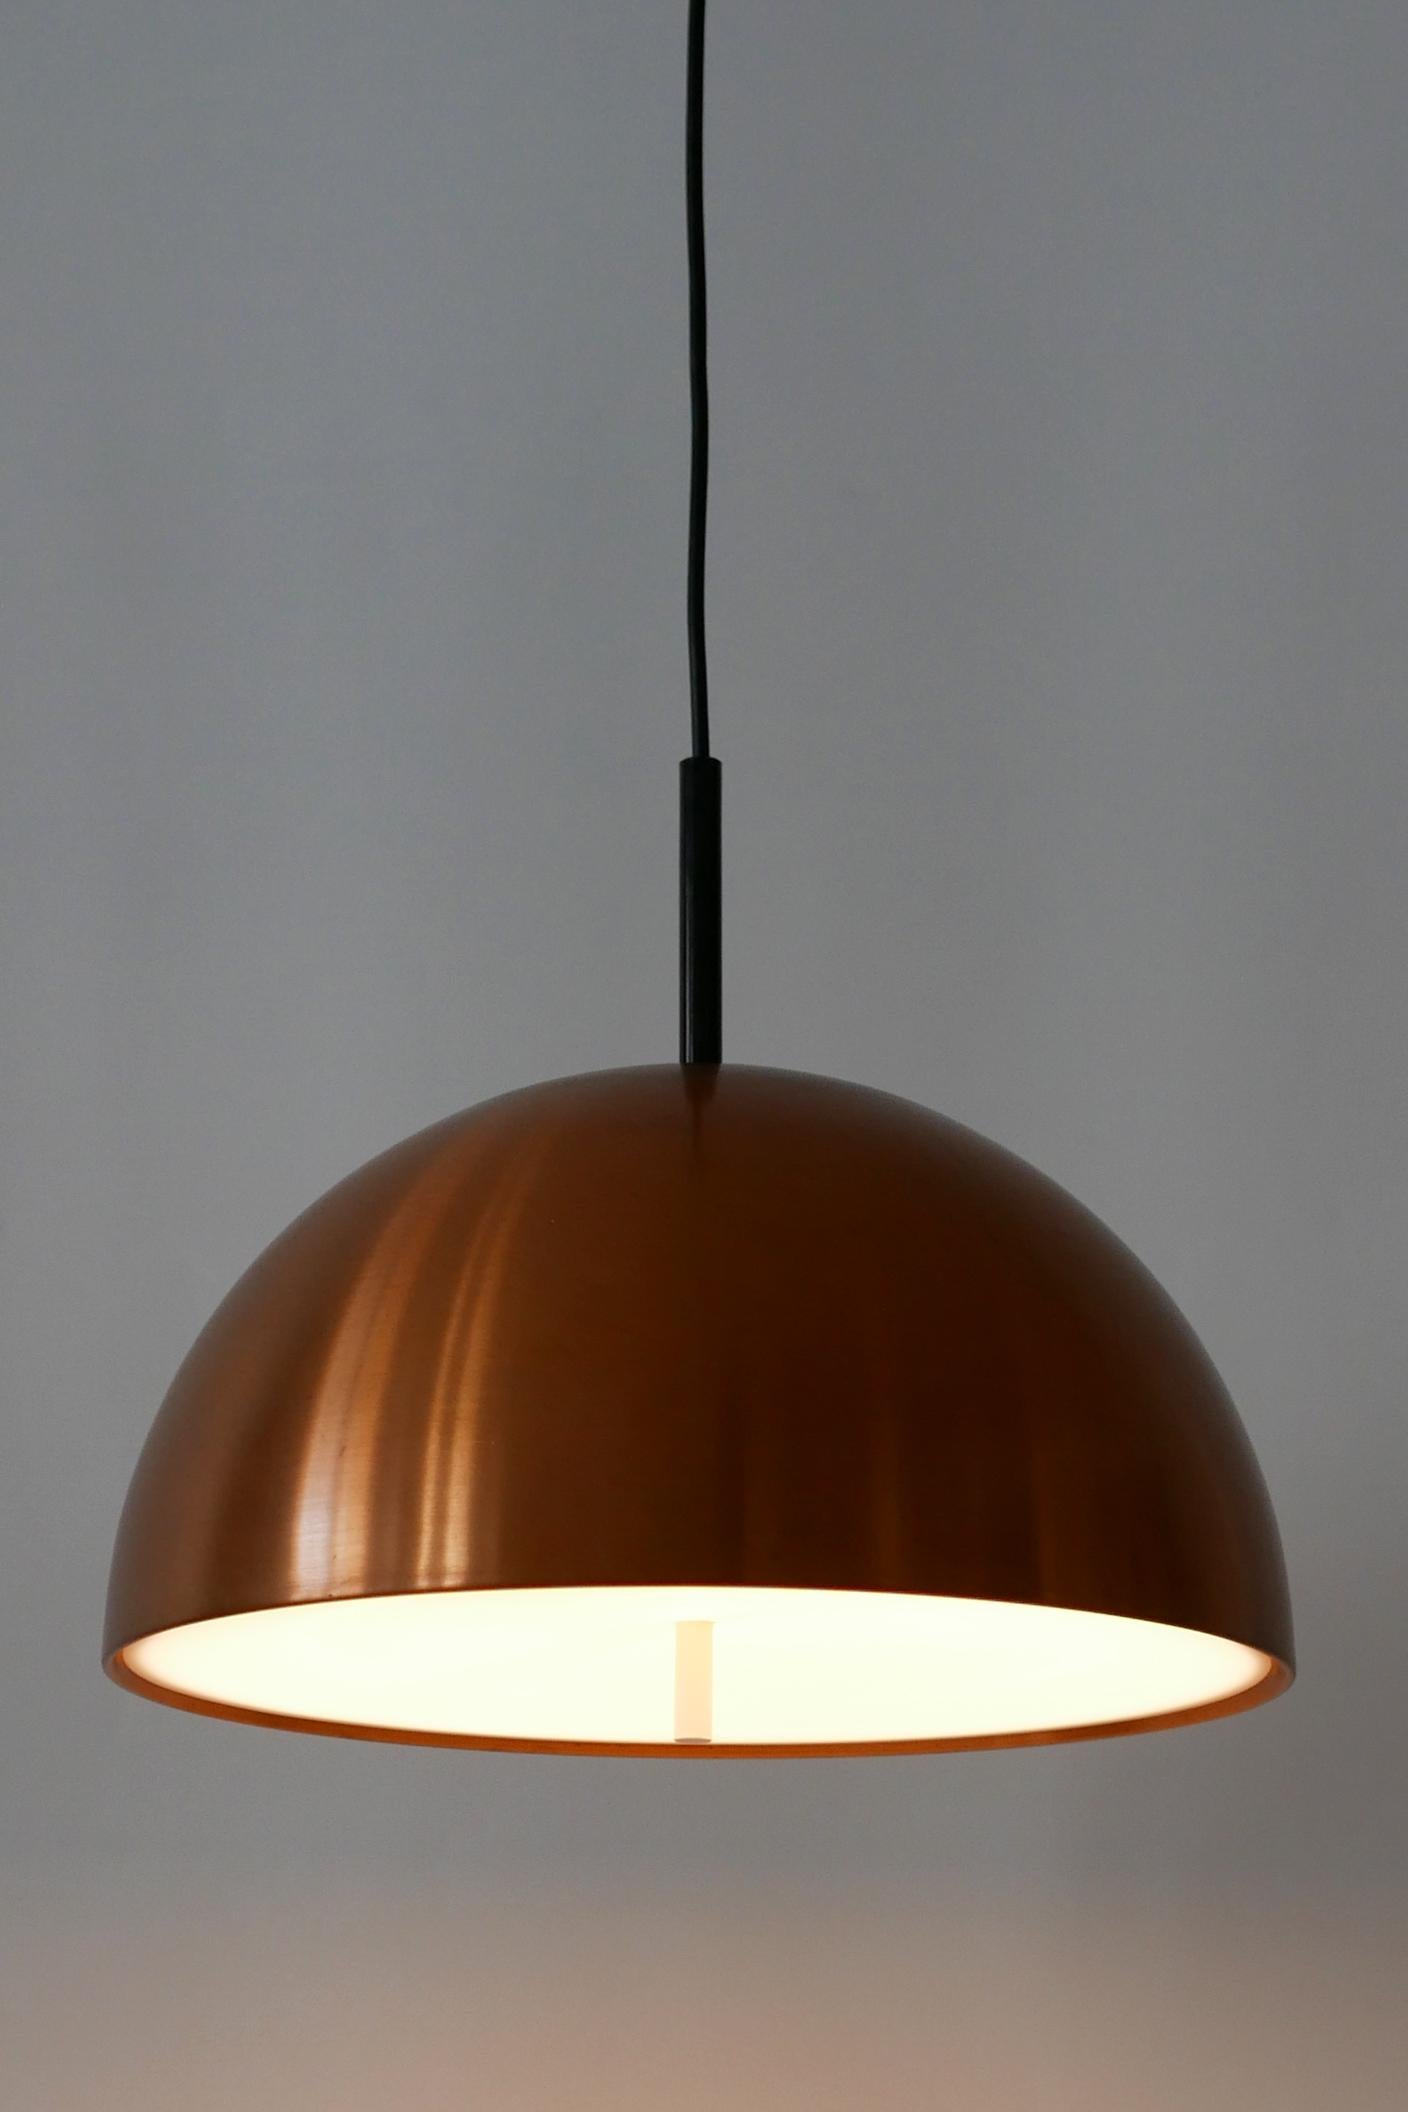 Elegant Mid-Century Modern Copper Pendant Lamp by Staff & Schwarz 1960s, Germany For Sale 10